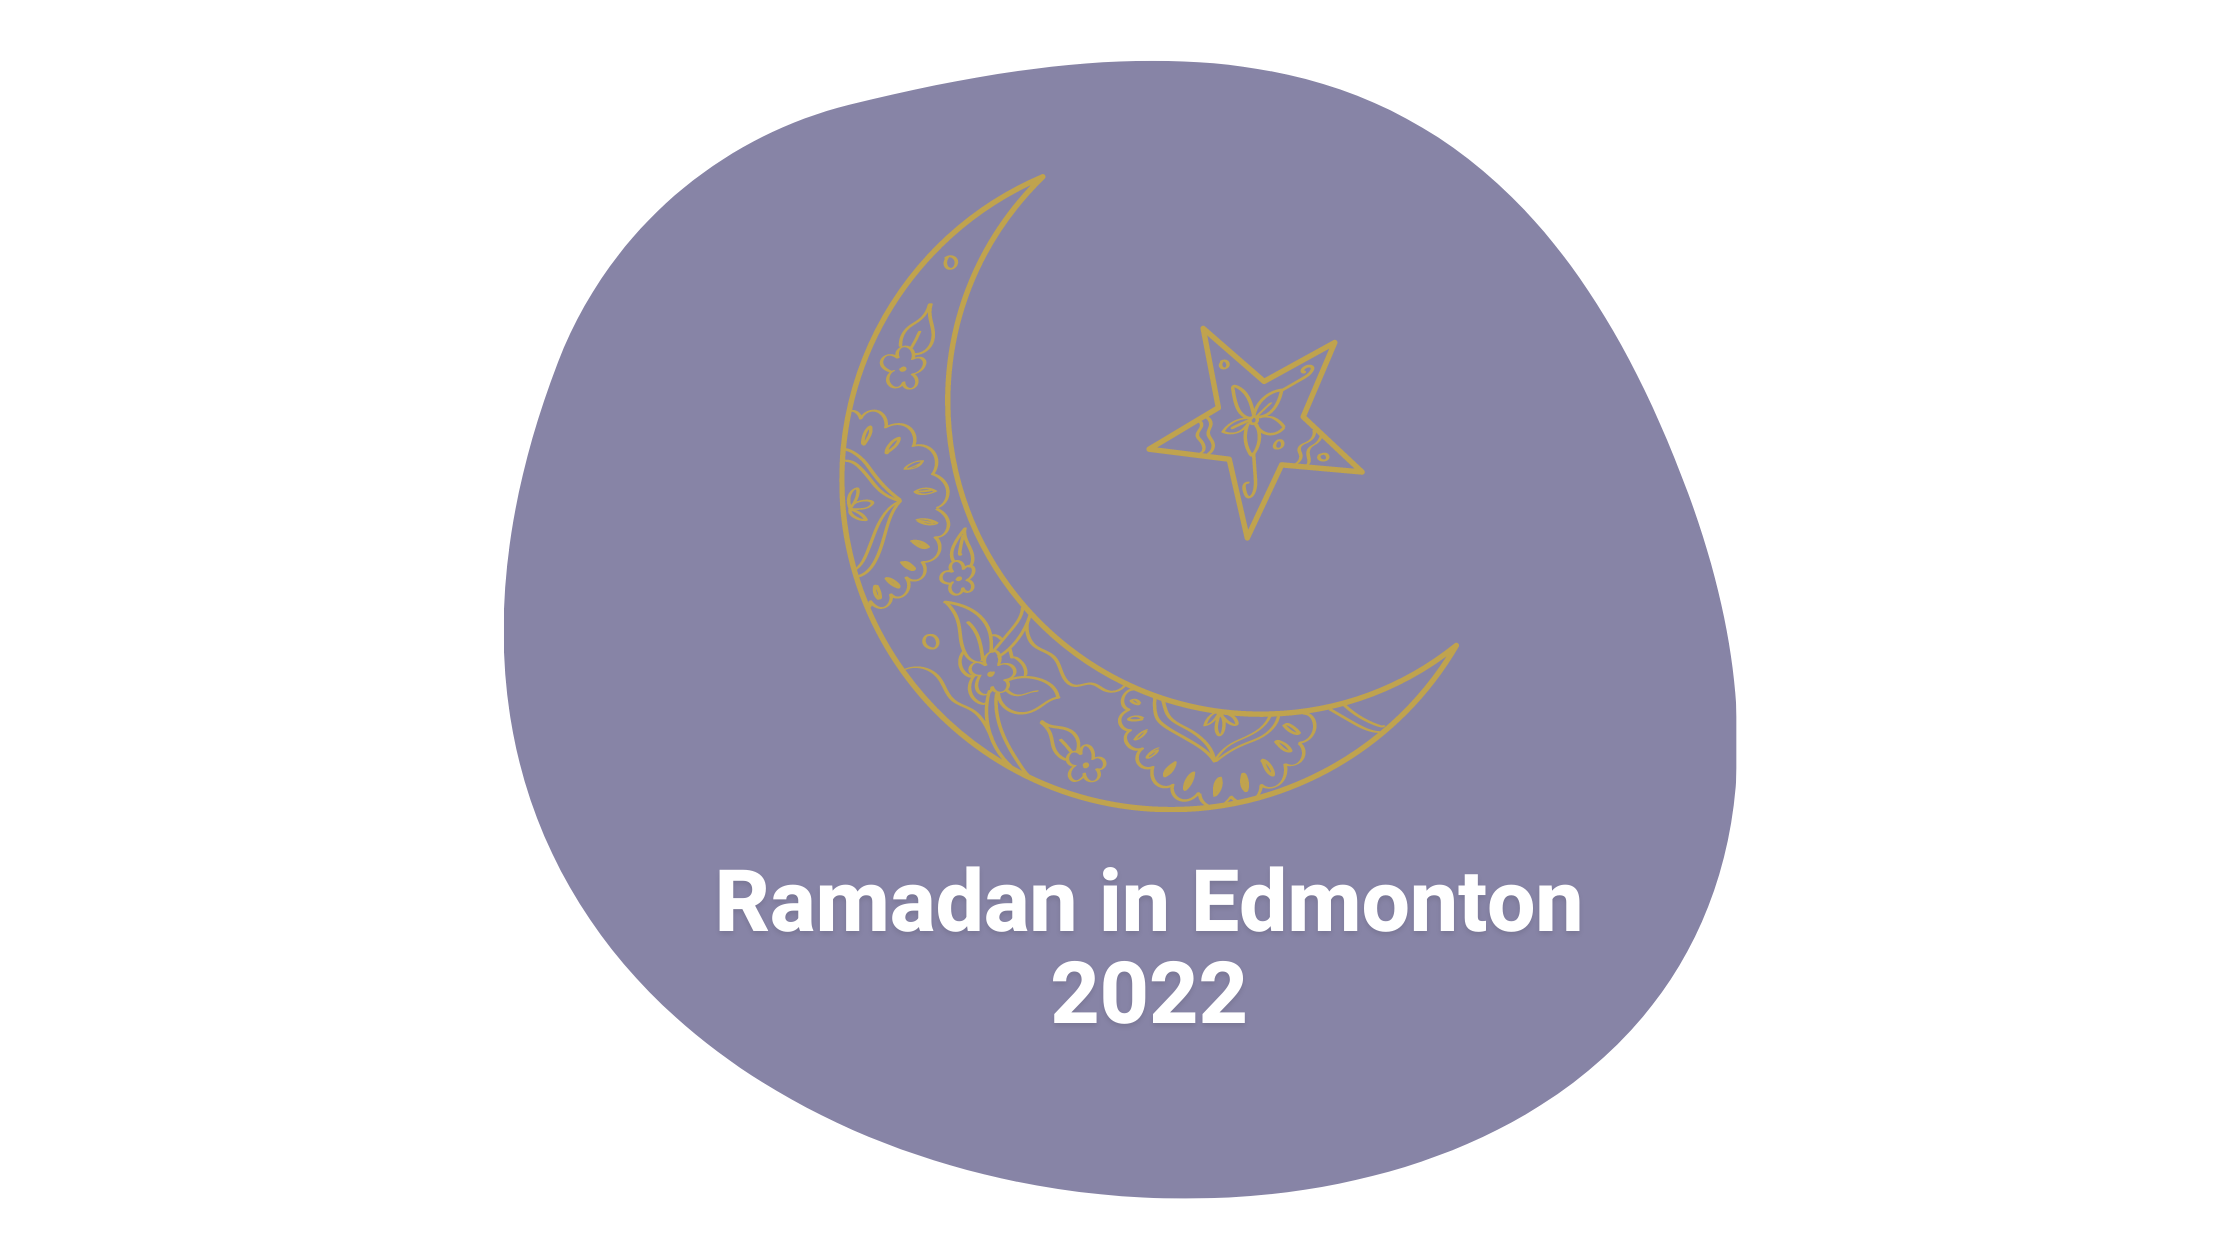 Ramadan in Edmonton 2022 Remitbee